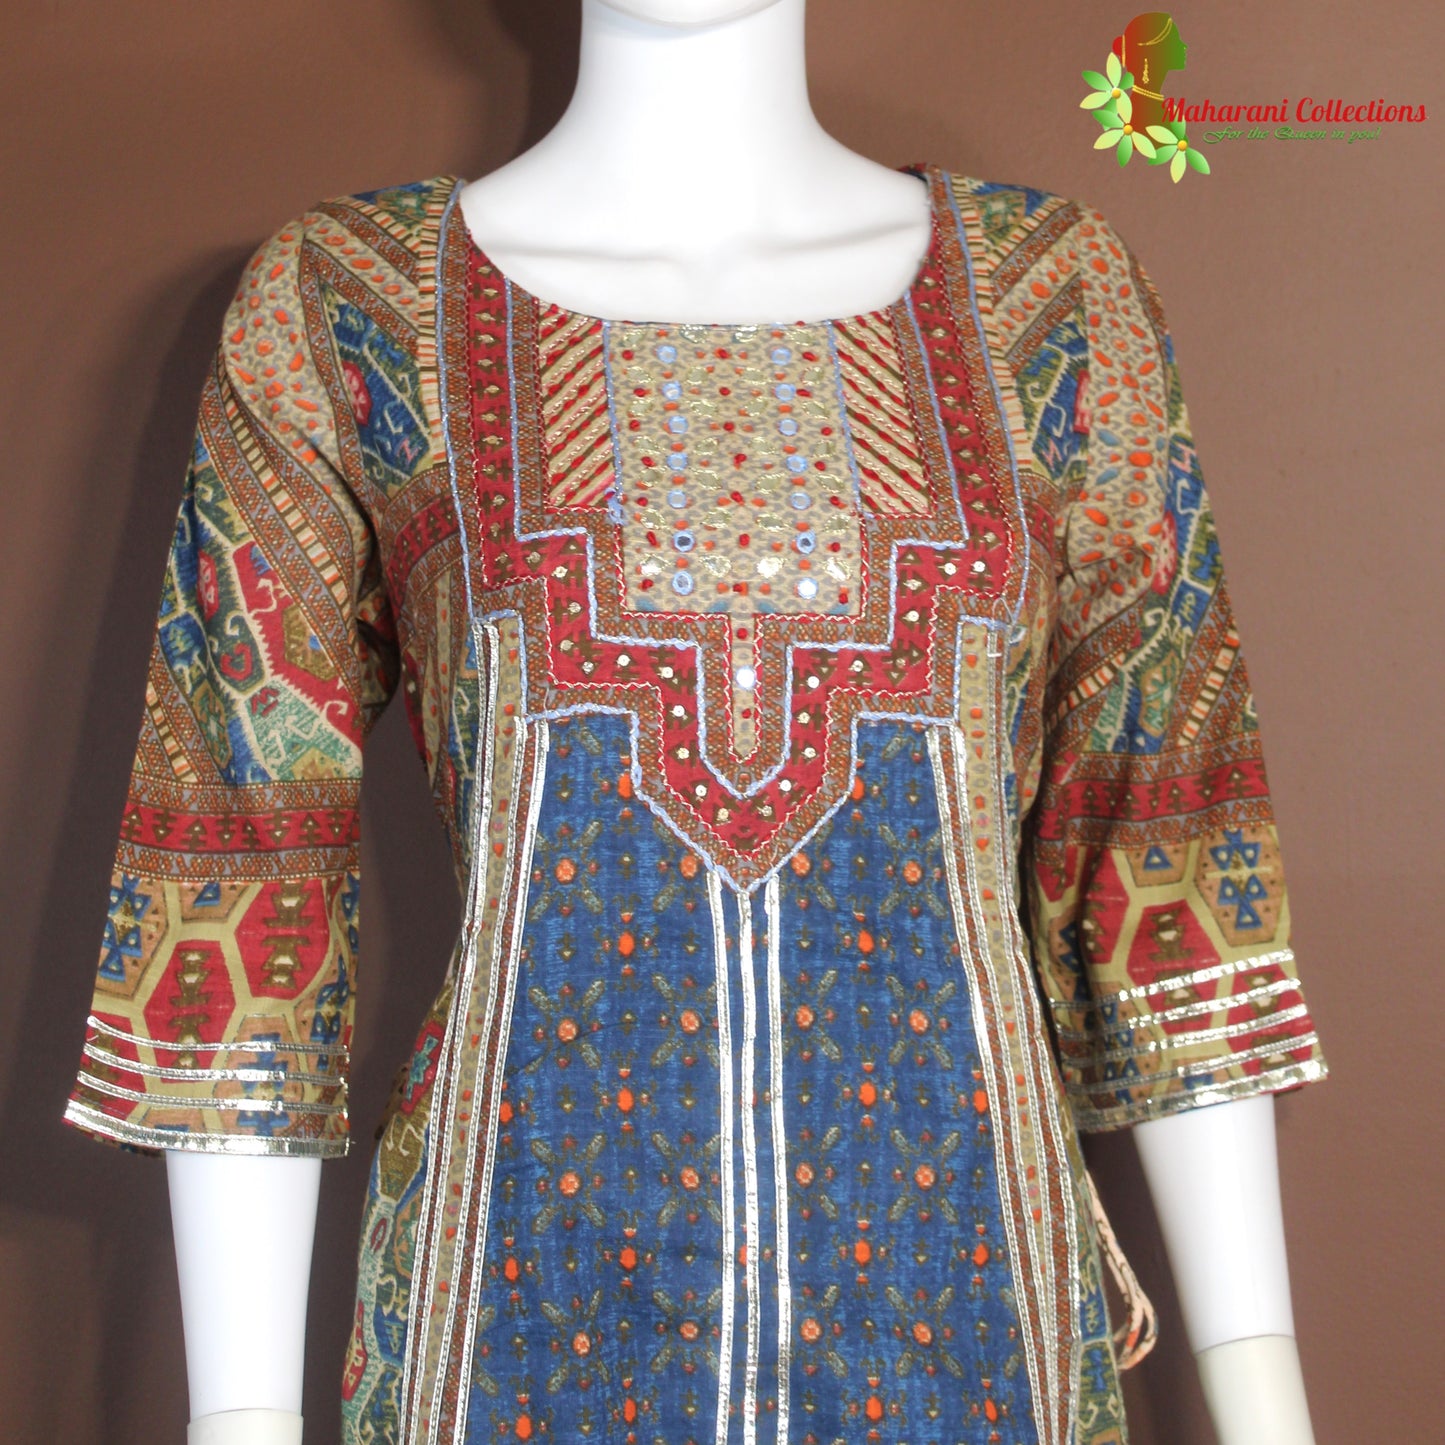 Maharani's Long Dress - Pure Cotton - Blue Multicolor (M, L)